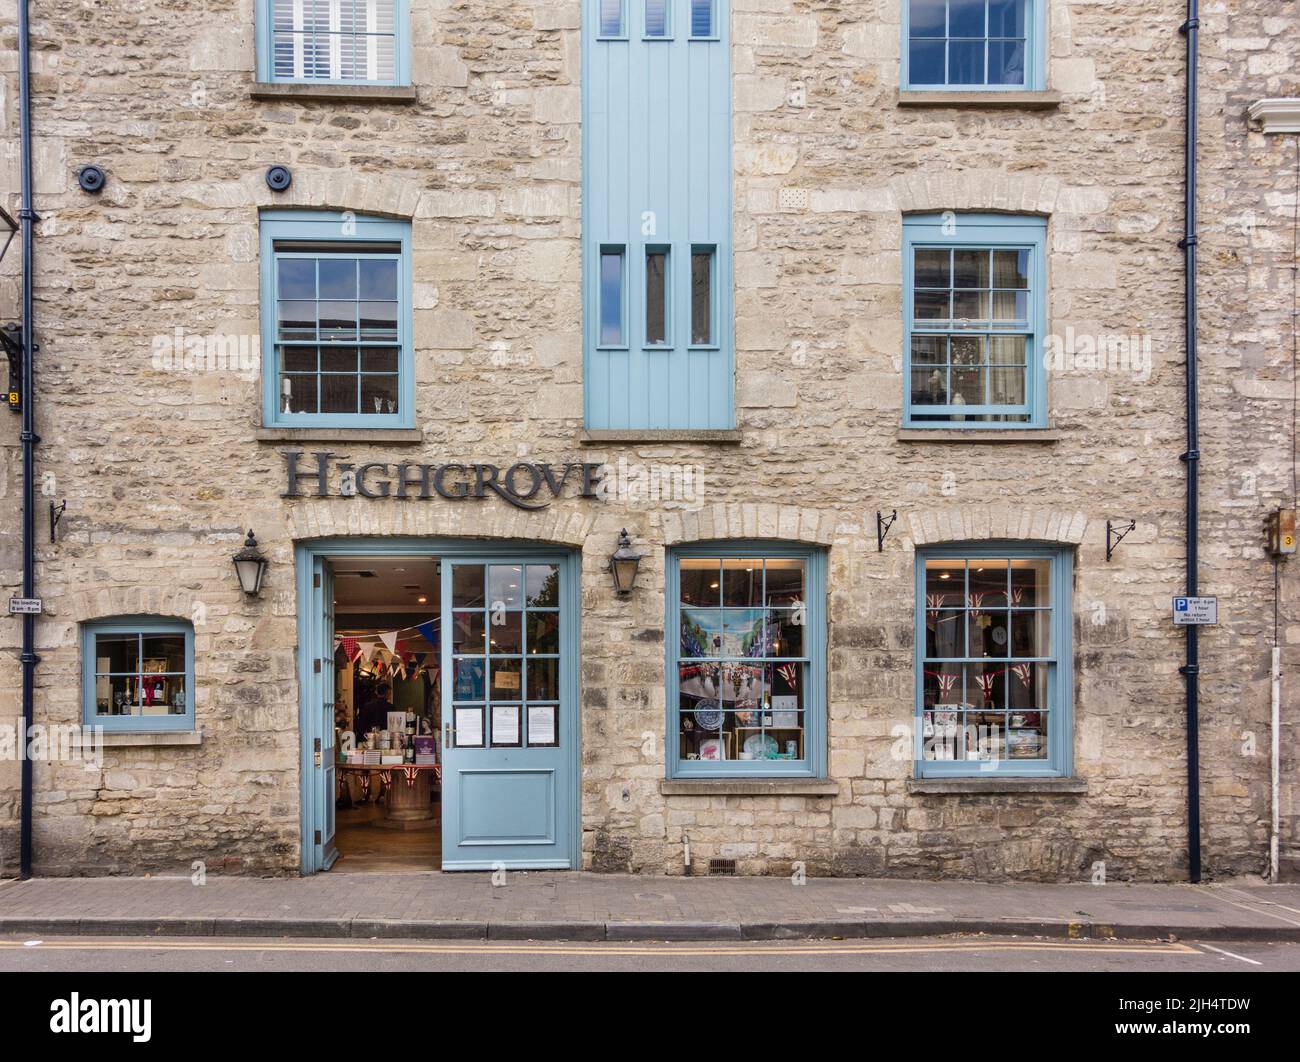 Highgrove Shop, Tetbury, Gloucestershire, Regno Unito Foto Stock